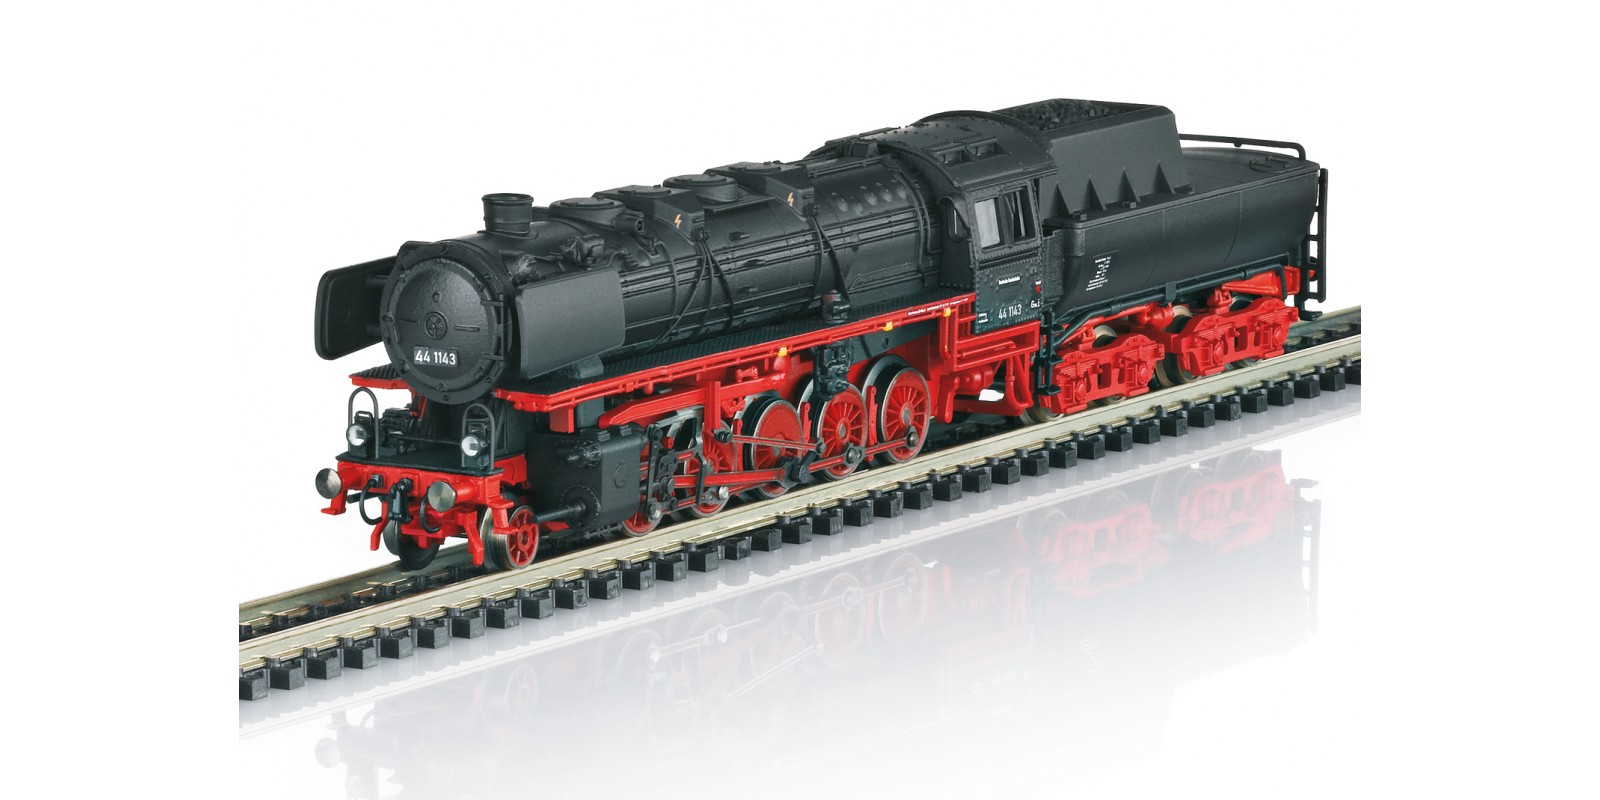 T16441 Class 44 Steam Locomotive